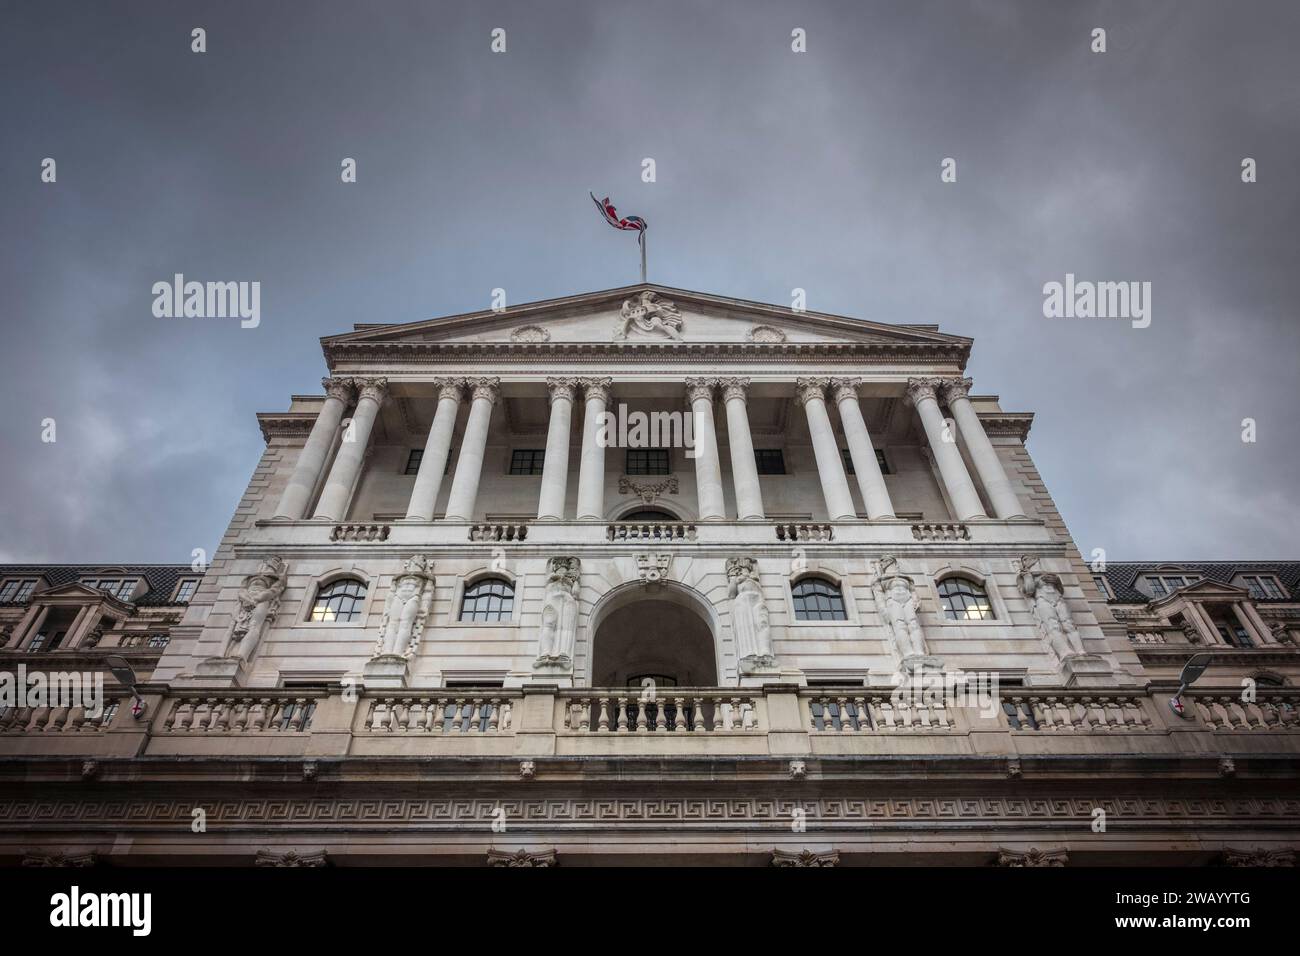 The Bank of England, London, Uk. Gloomy, miserable rain threatening sky. Stock Photo